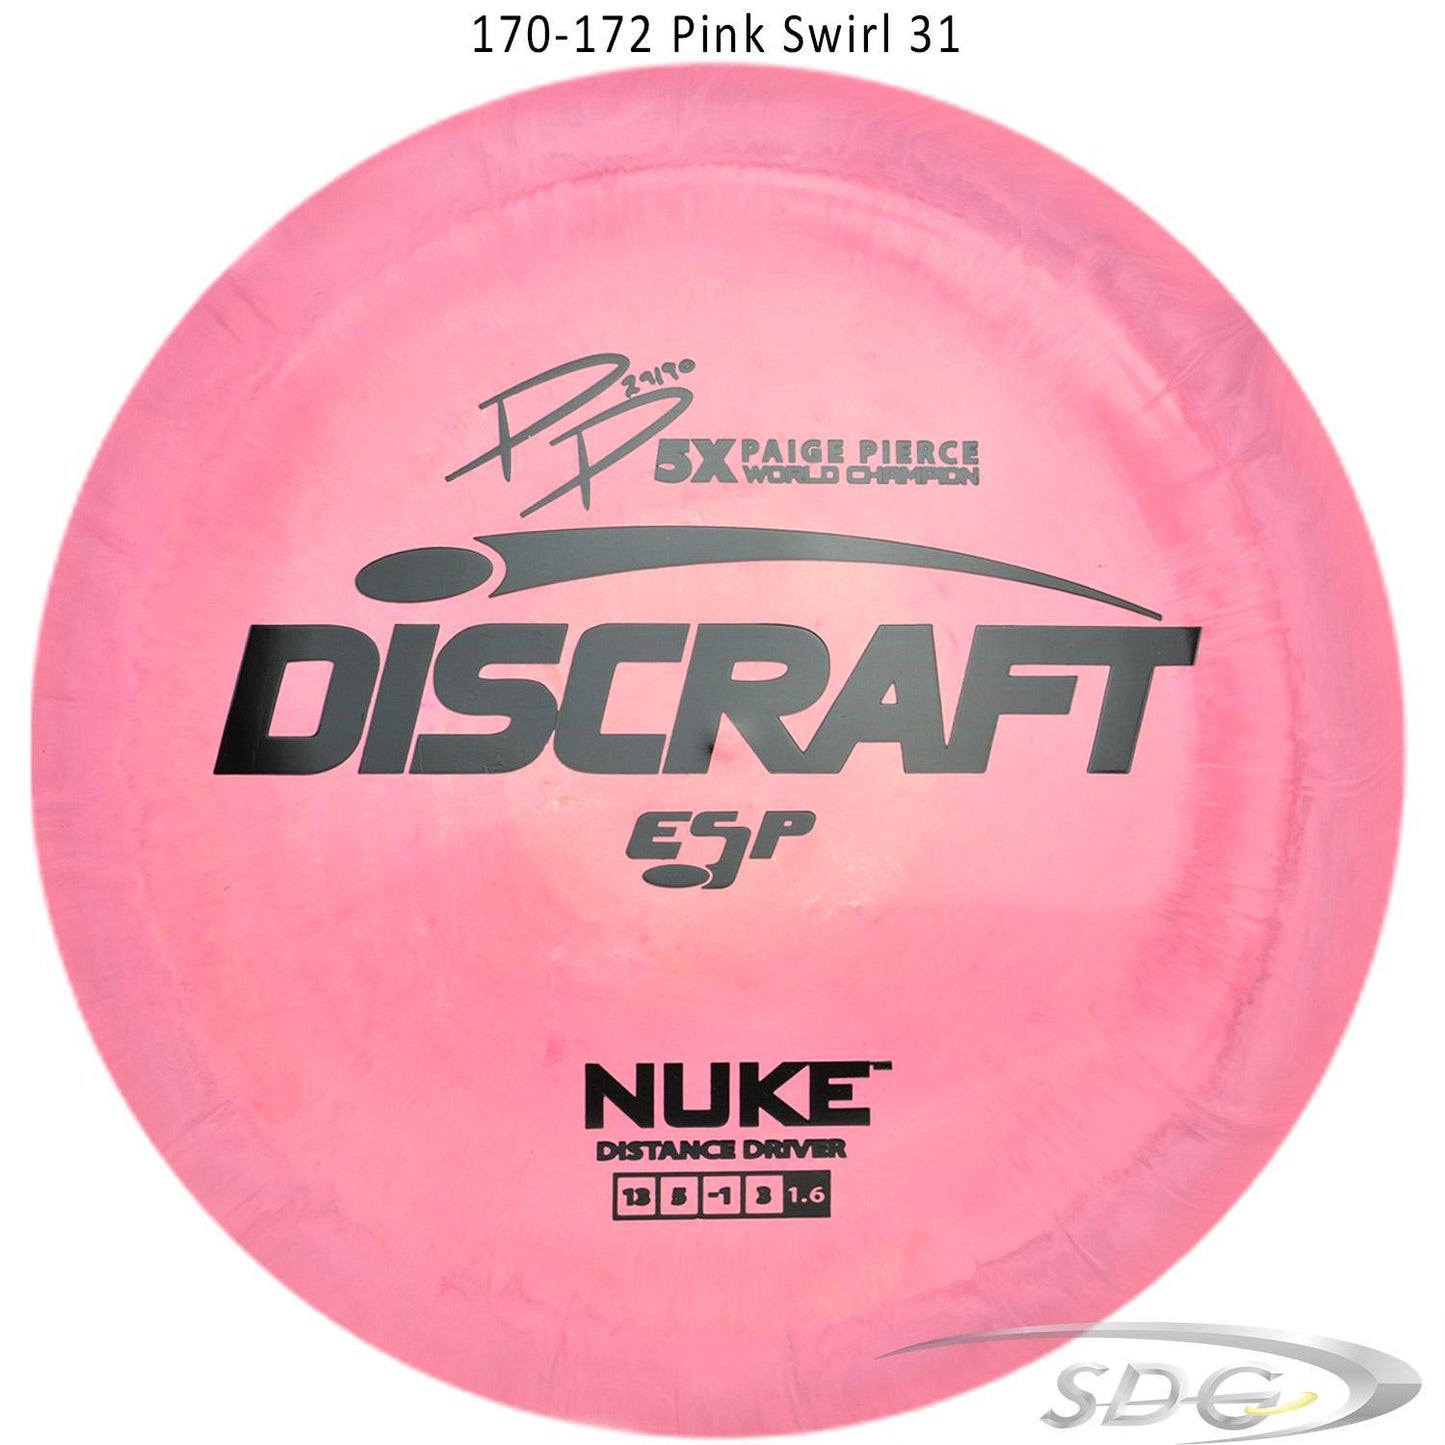 discraft-esp-nuke-paige-pierce-signature-disc-golf-distance-driver-172-170-weights 170-172 Pink Swirl 31 